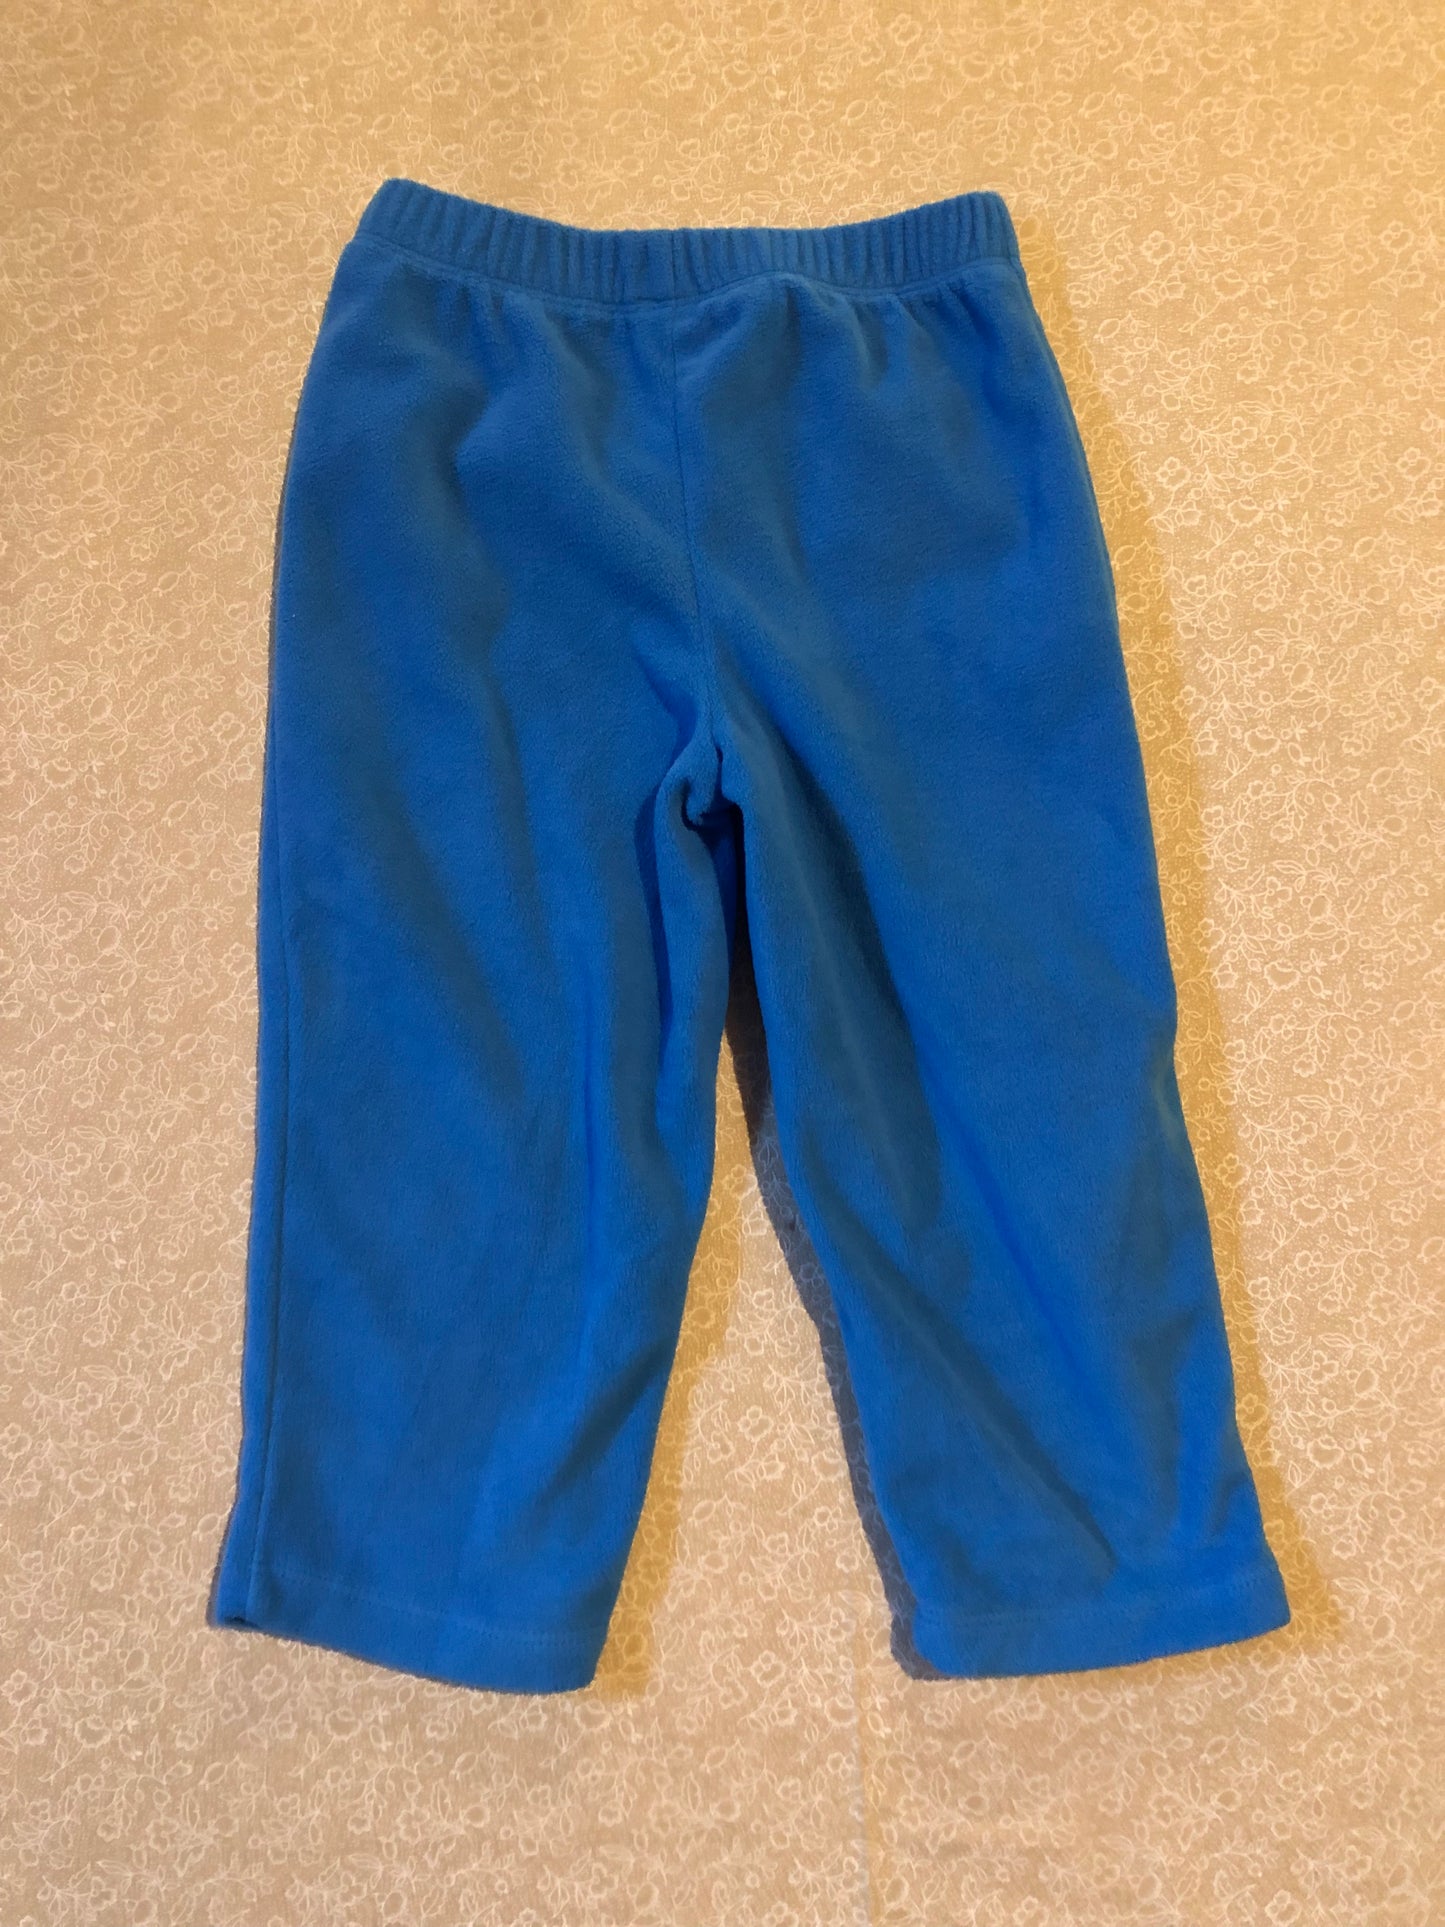 24-months-pants-carters-blue-fleece